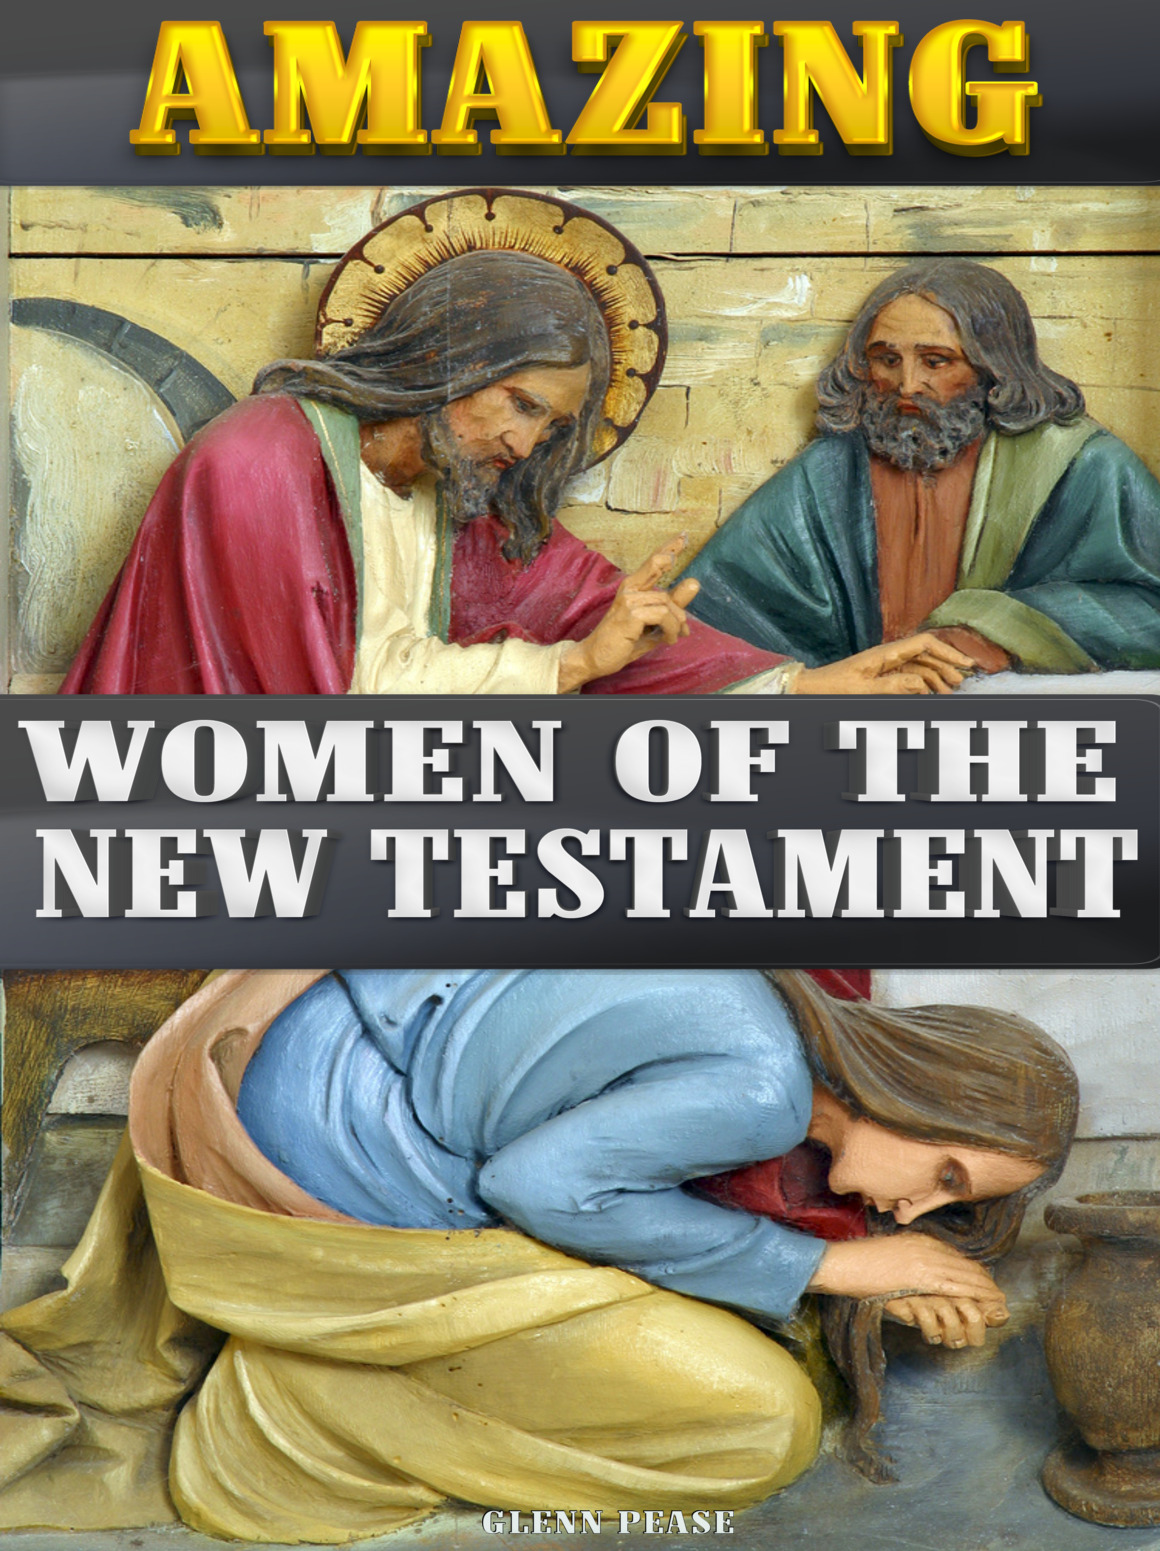 AMAZING WOMEN OF THE NEW TESAMENT